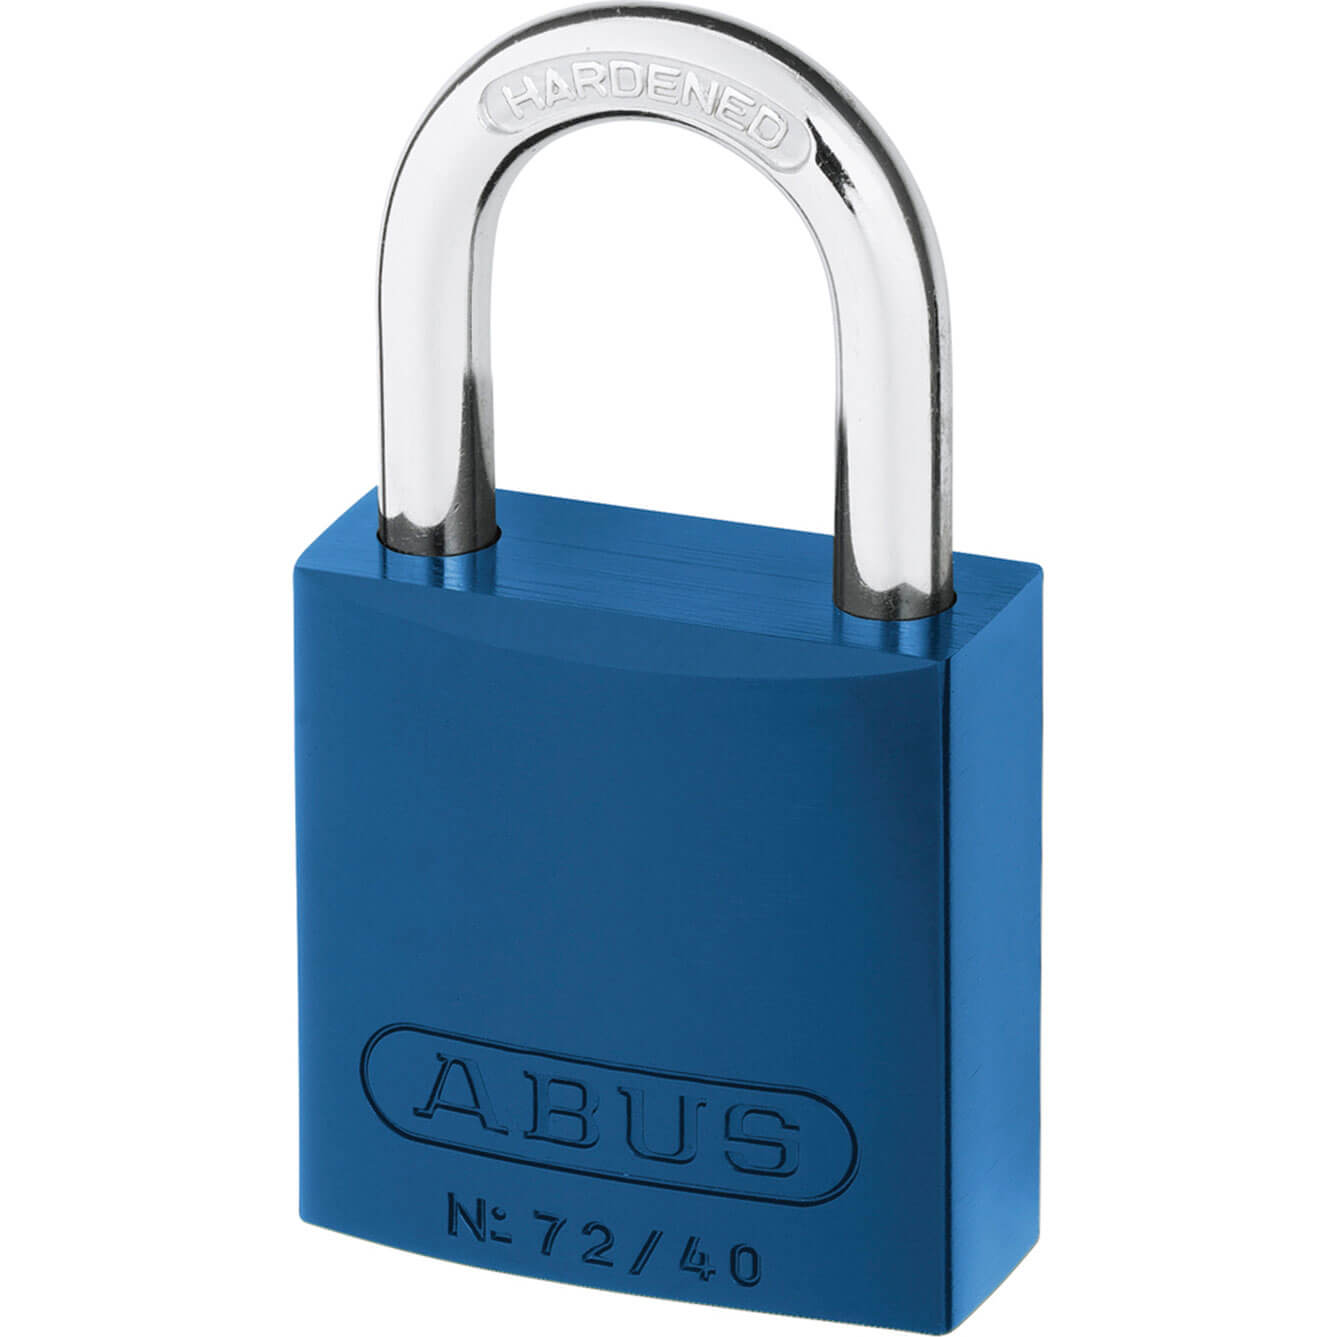 Image of Abus 72 Series Aluminium Padlock Blue Keyed Alike 40mm Standard TT60121